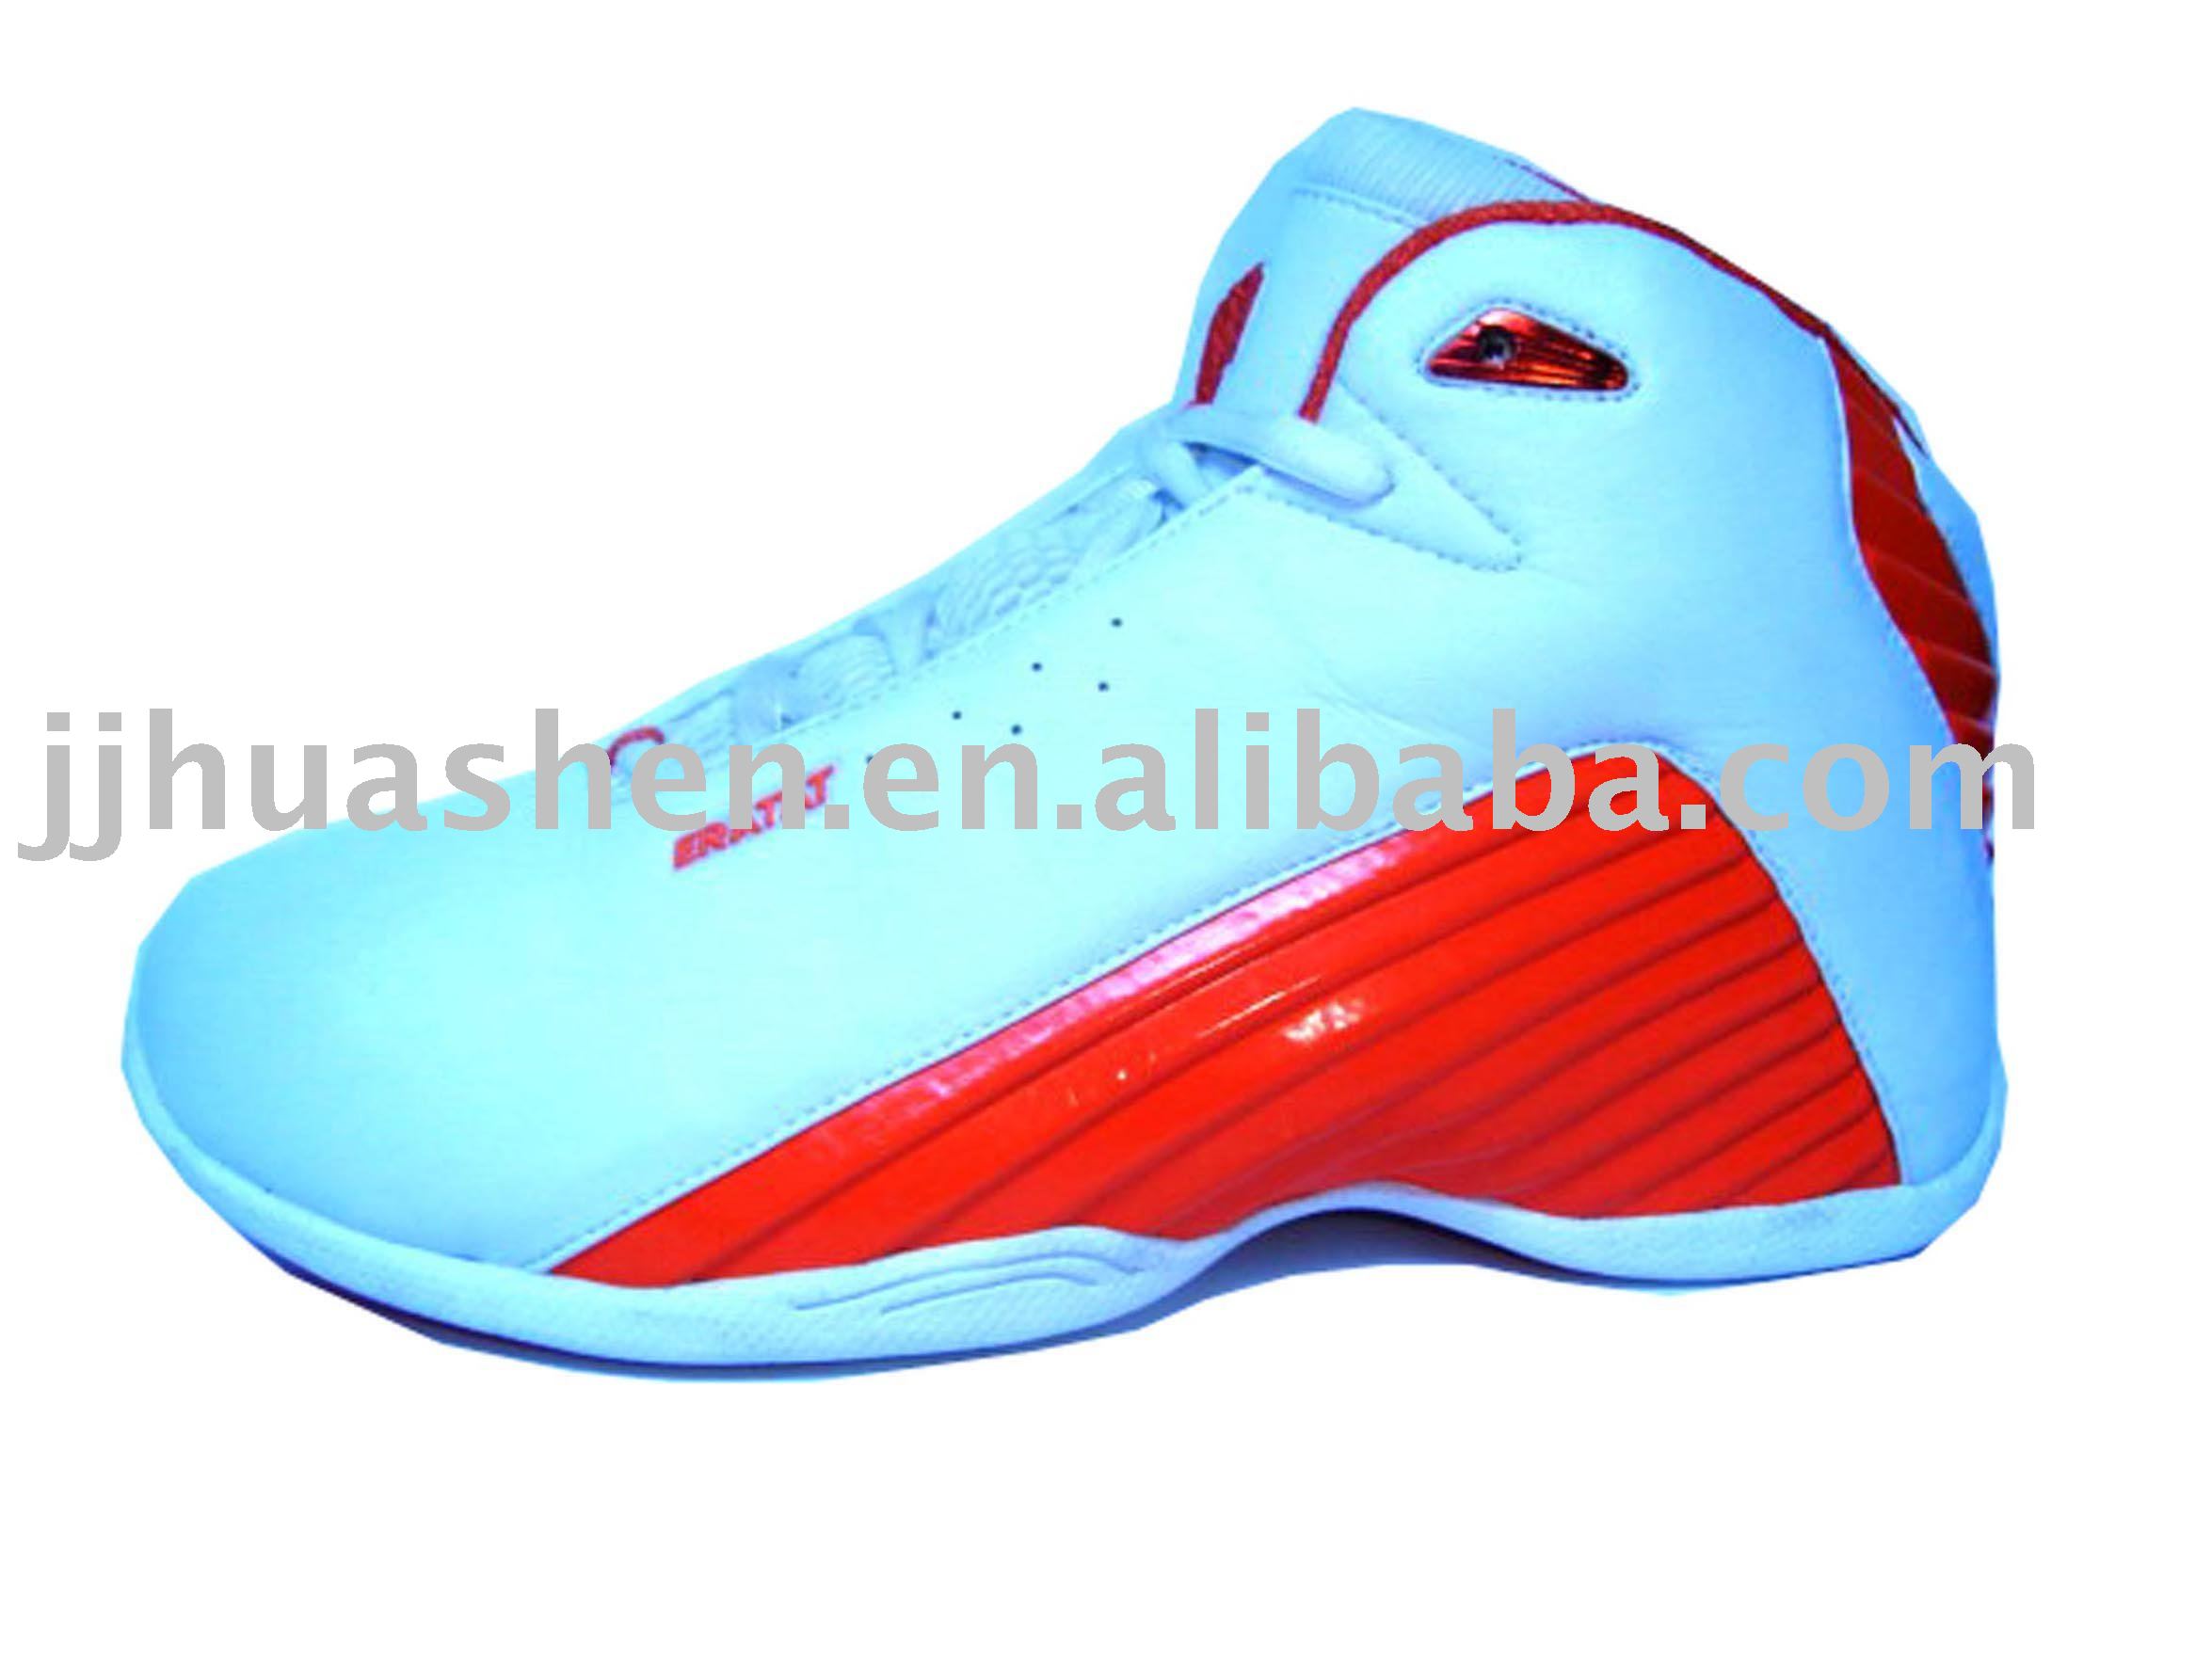 Basketball Shoe Images